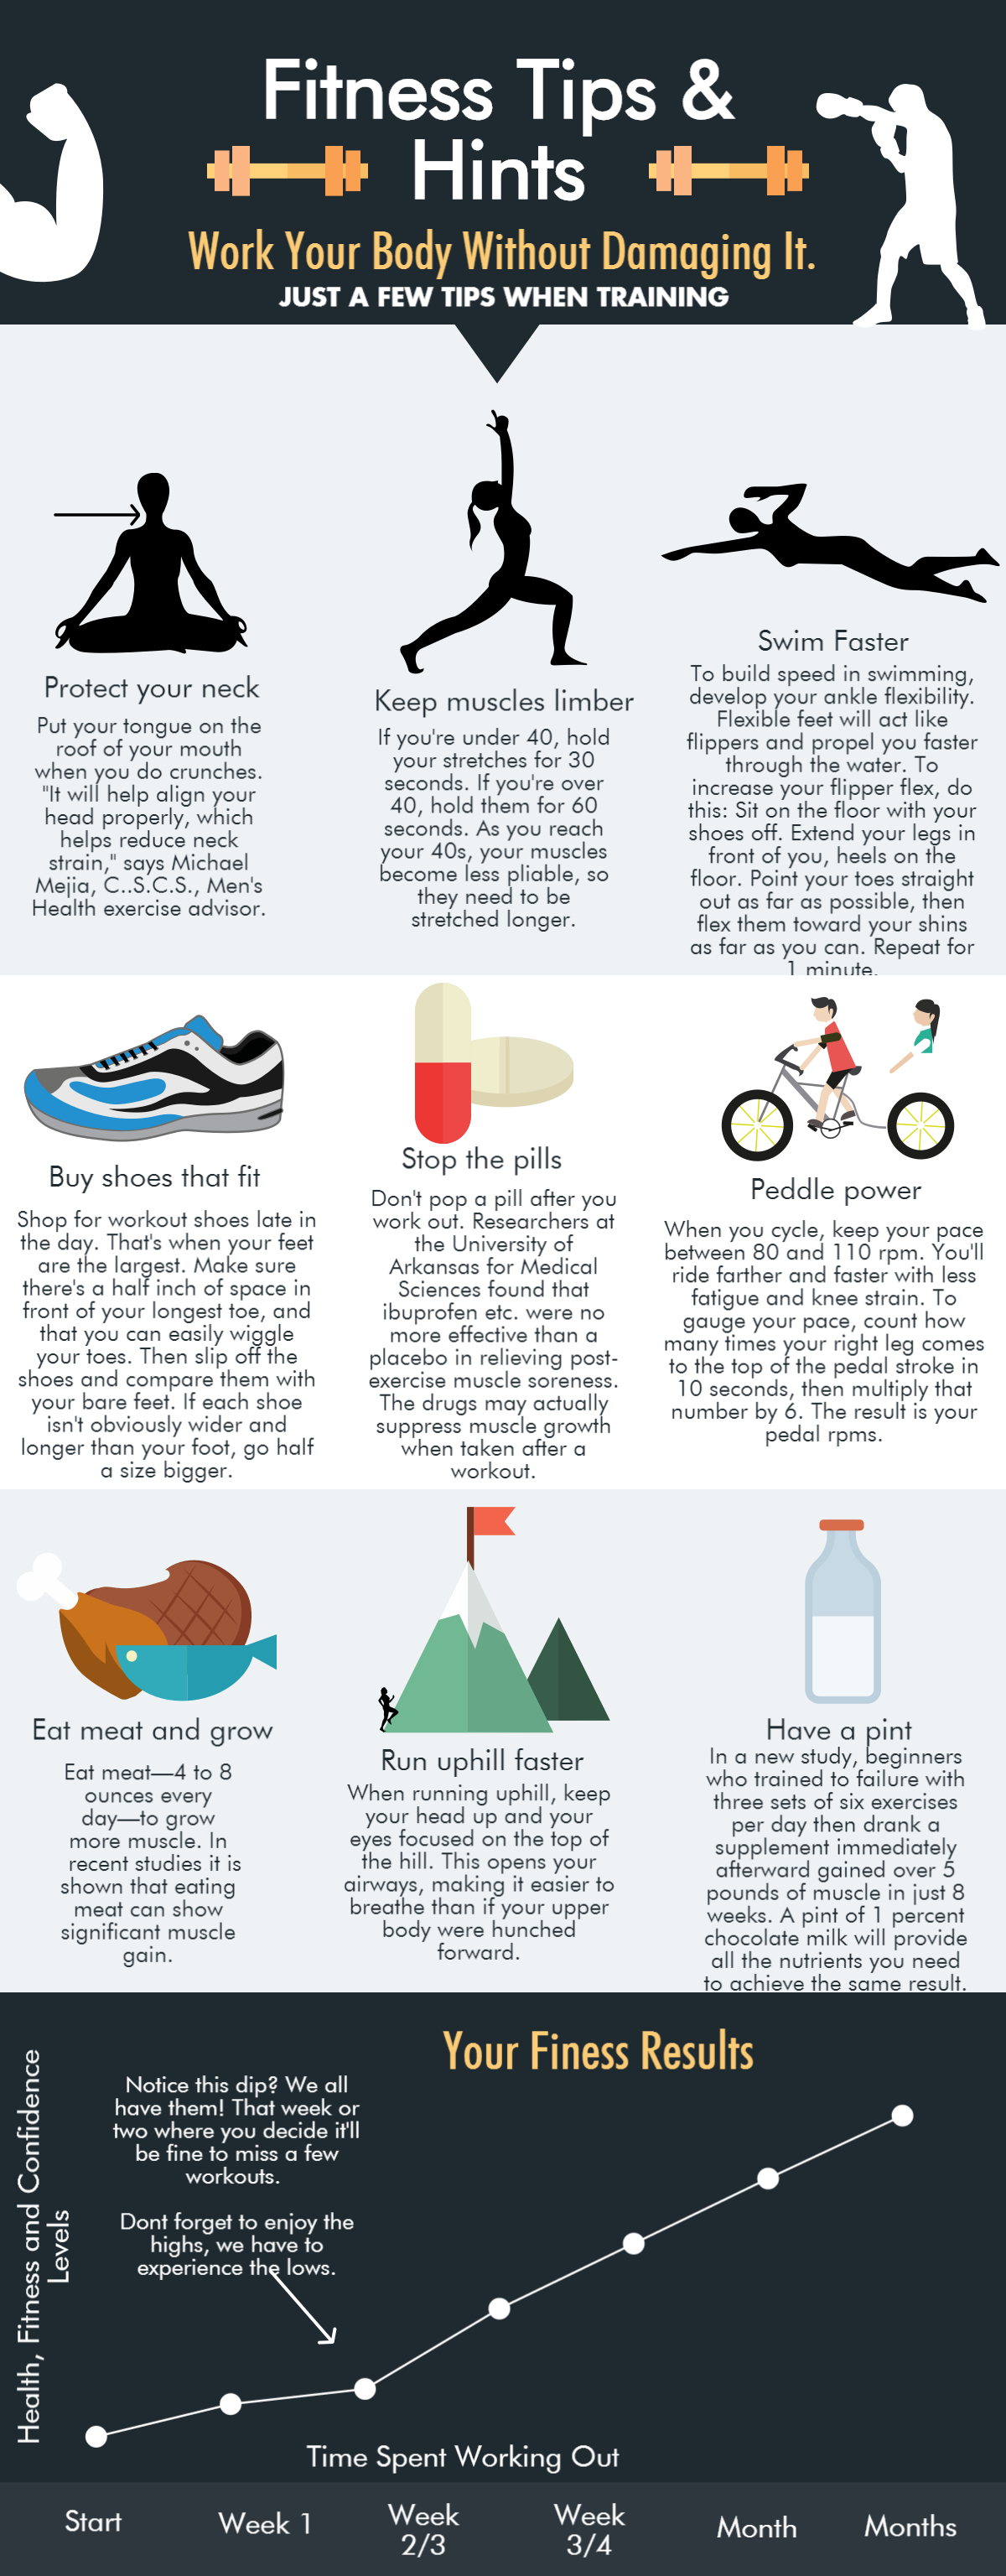 Pin on Health & Exercise Tips #LetsSweat